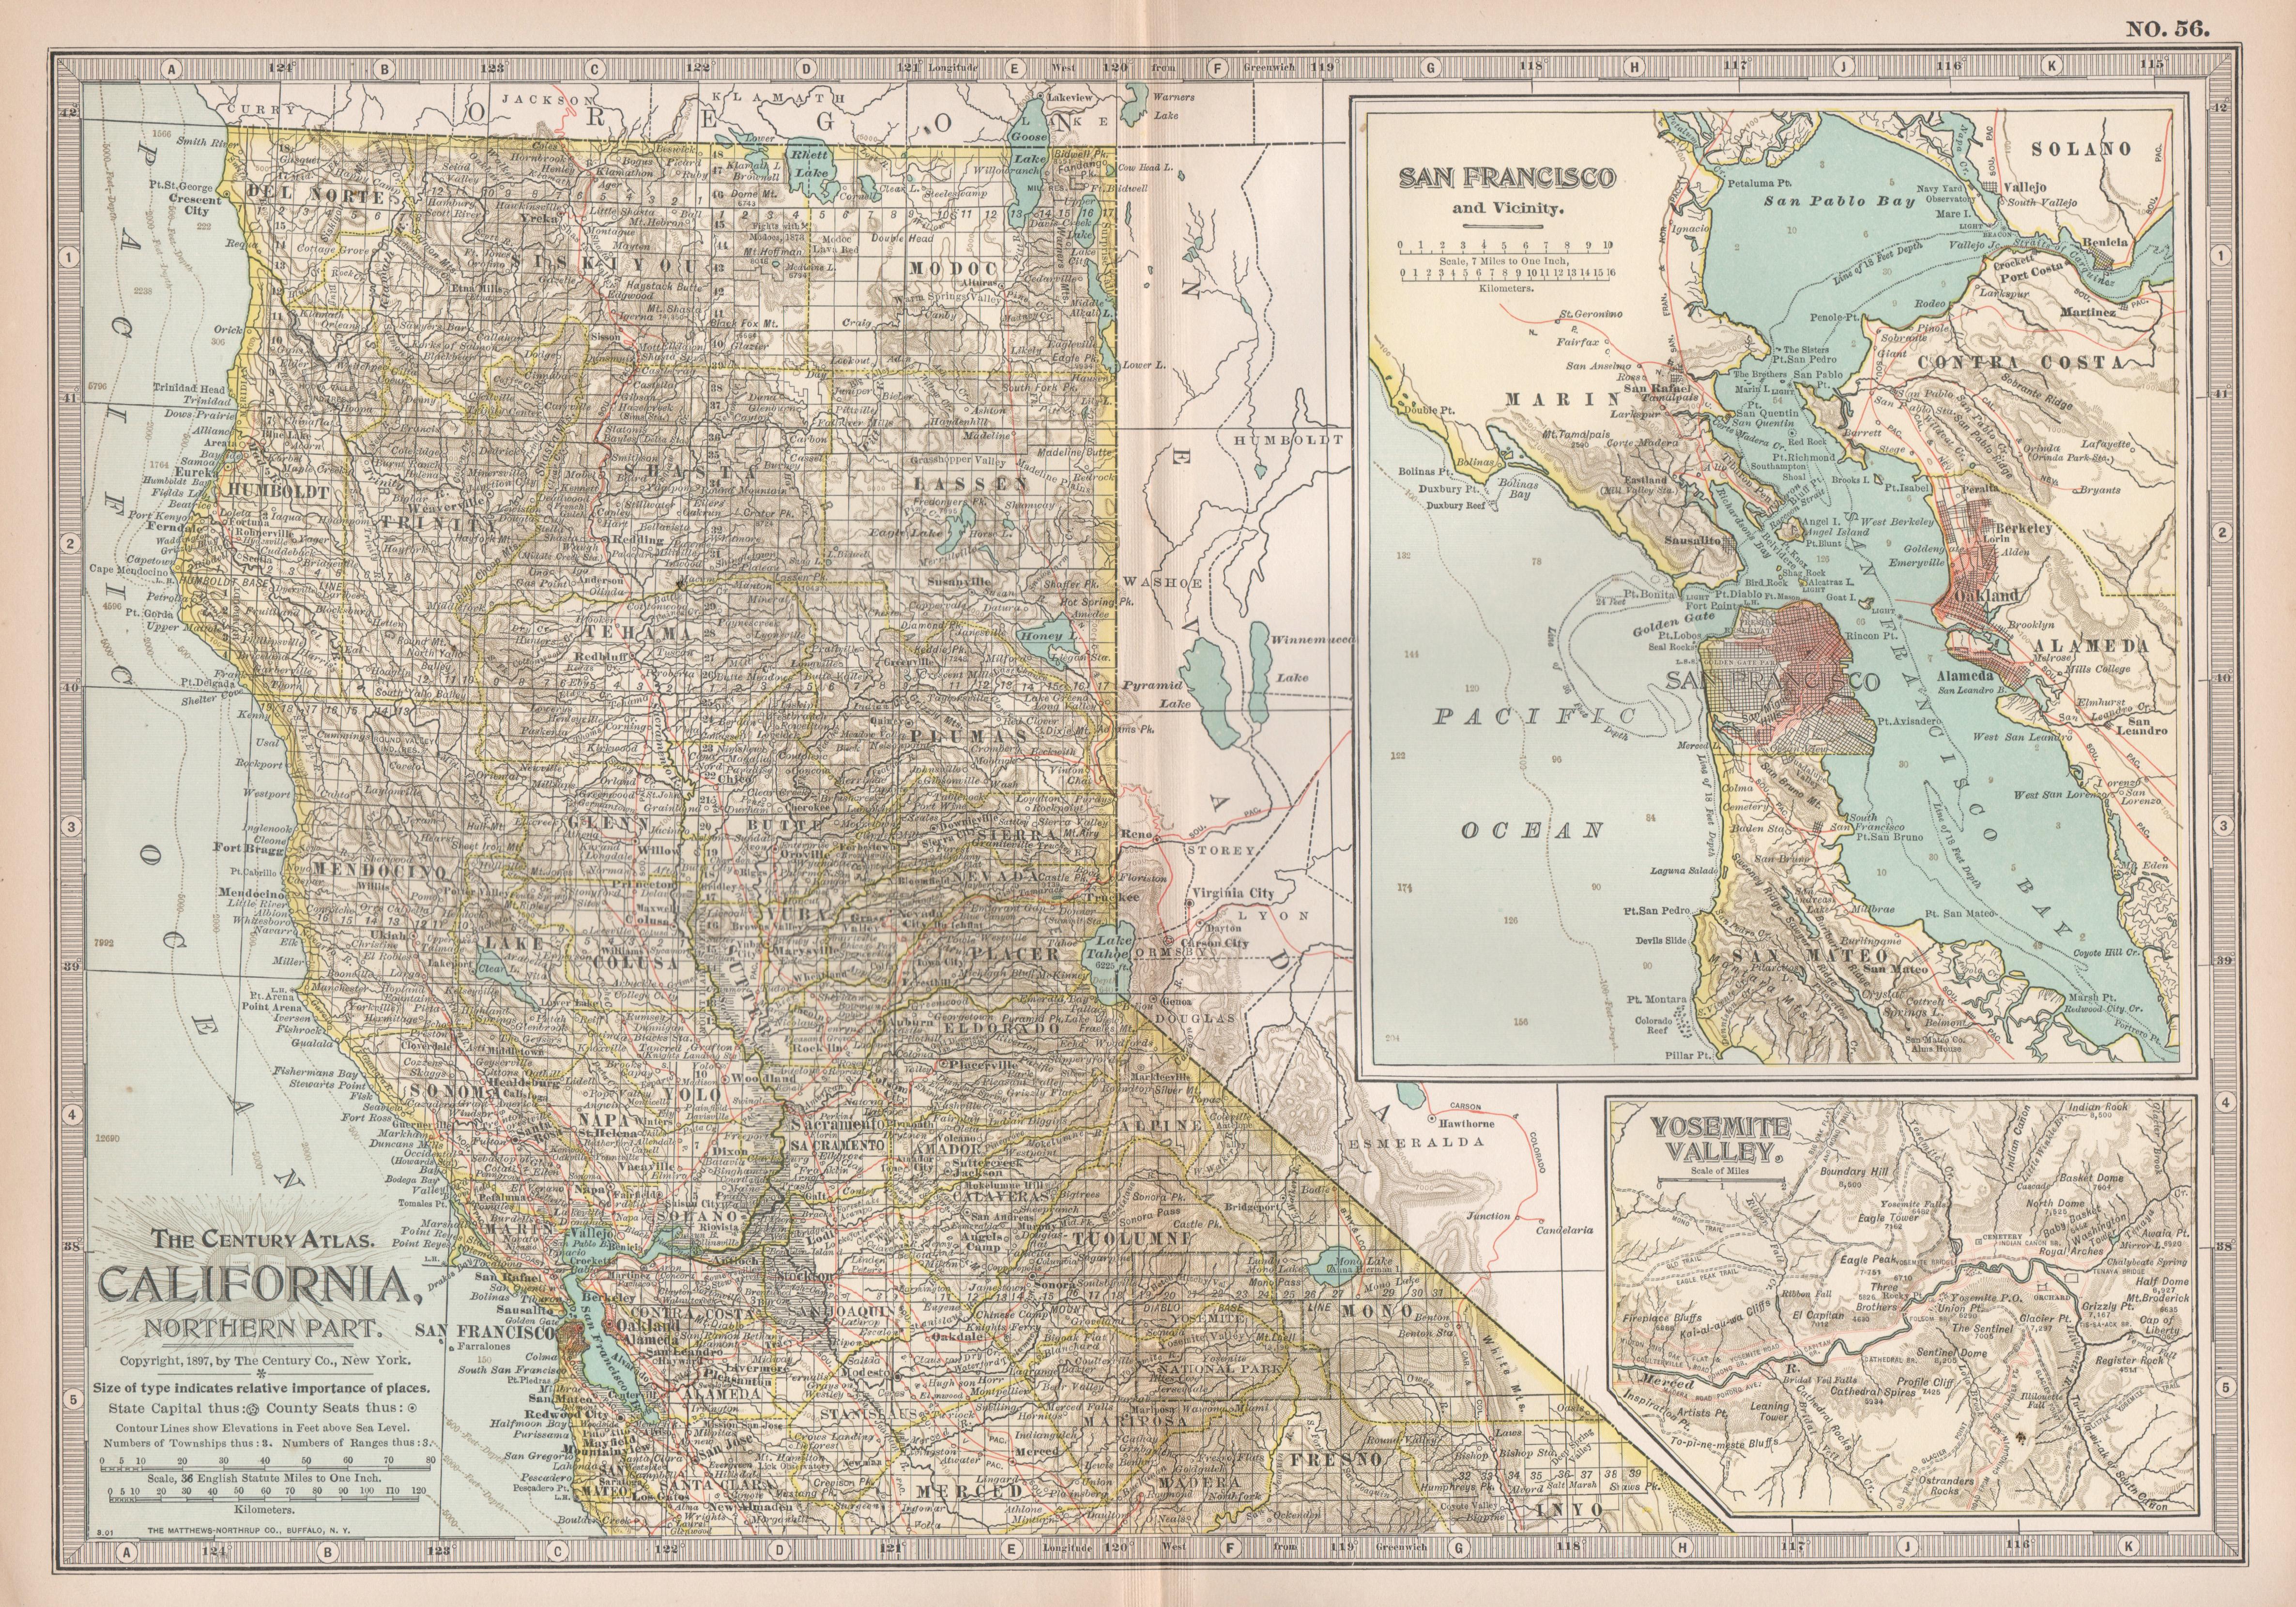 Unknown Print - California, Northern Part. USA Century Atlas state antique vintage map